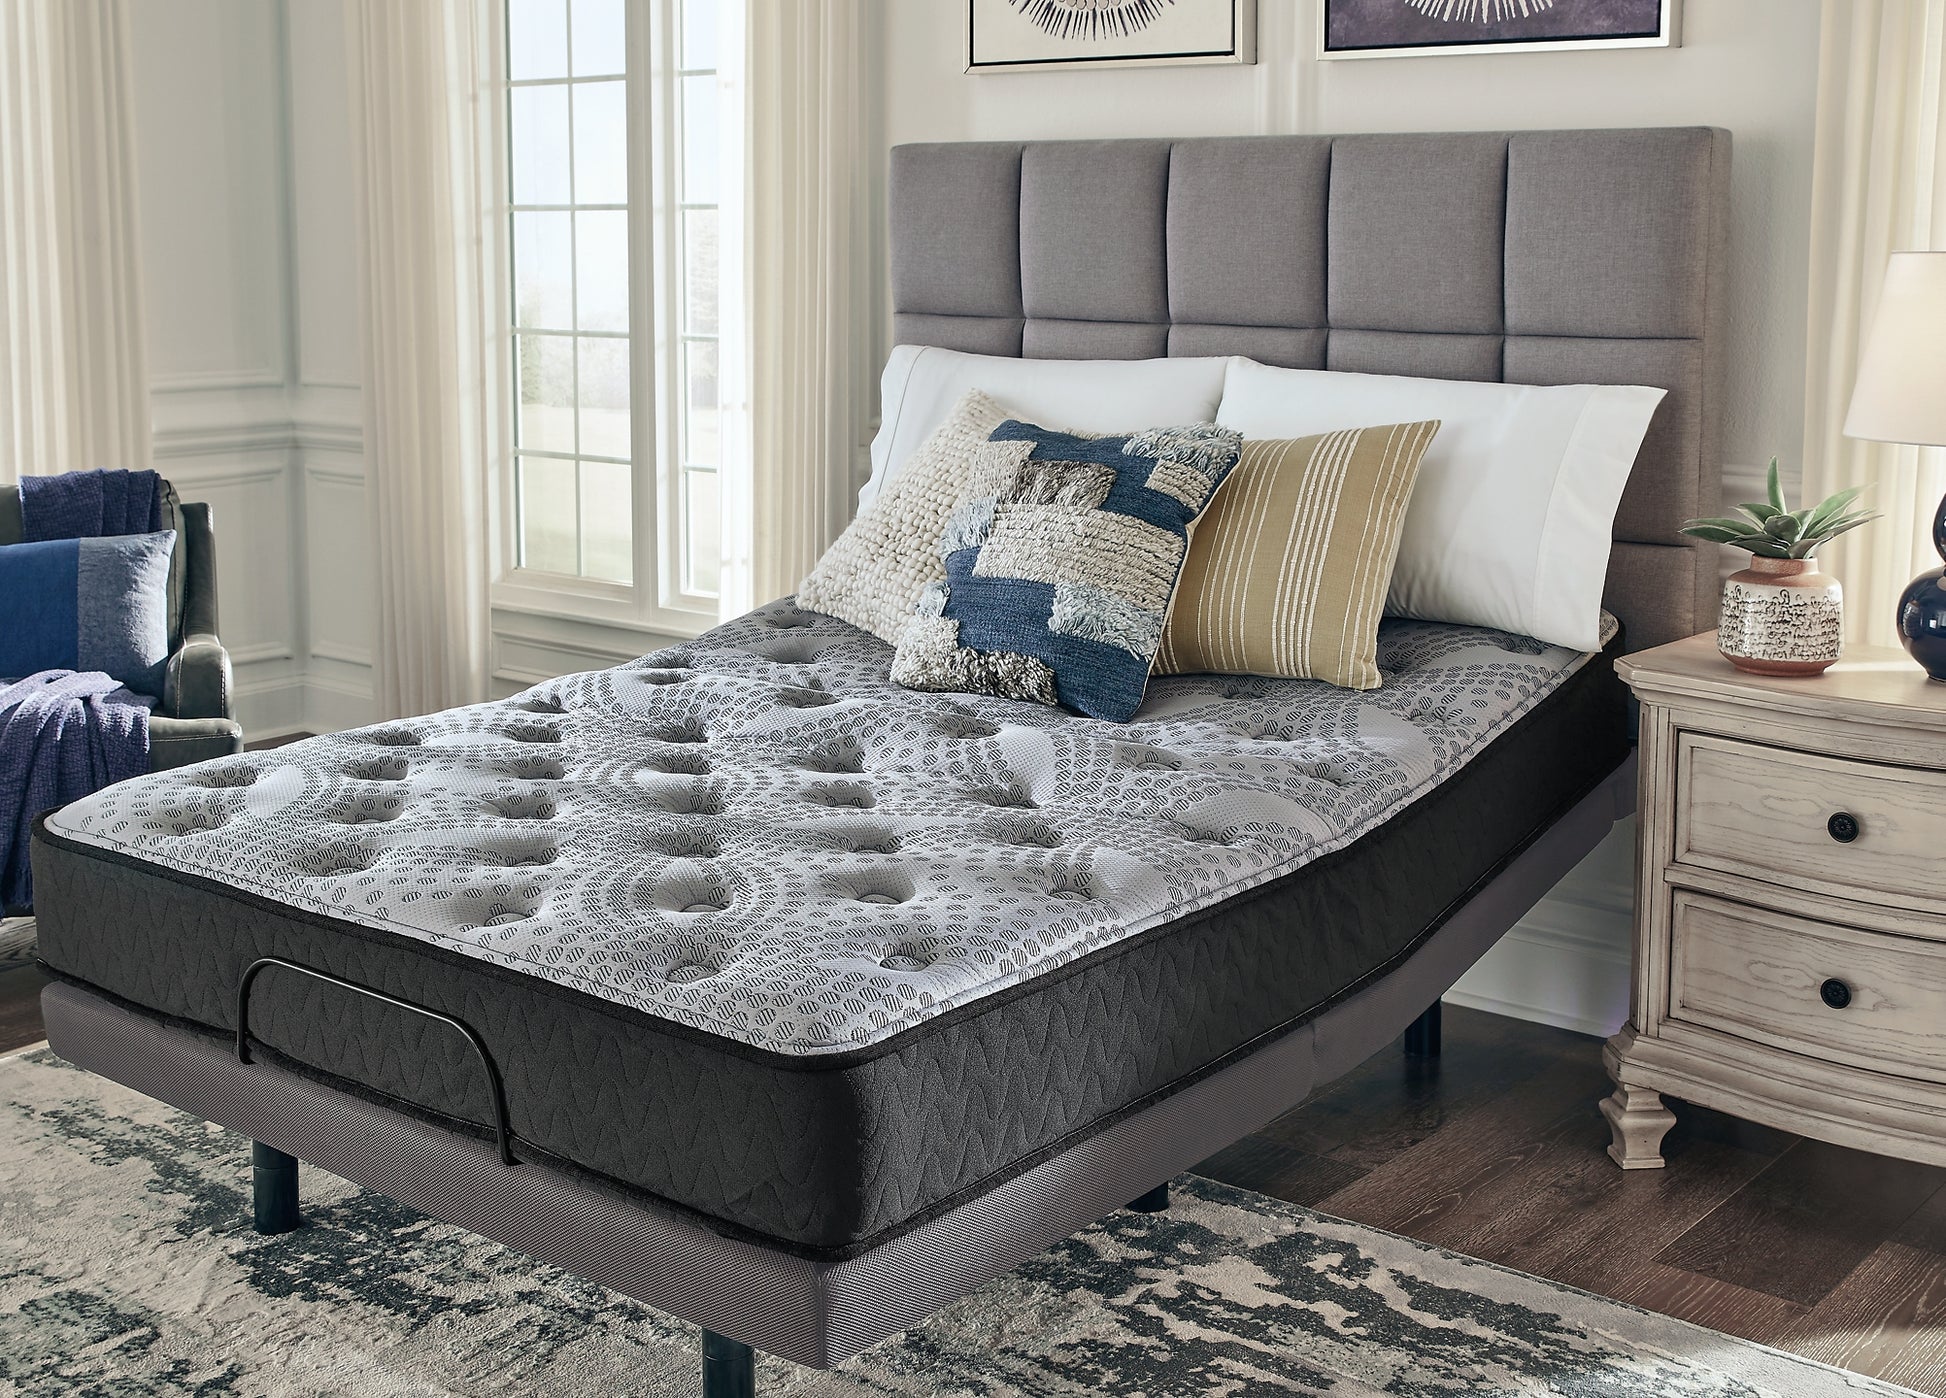 Comfort Plus Queen Mattress Sierra Sleep® by Ashley